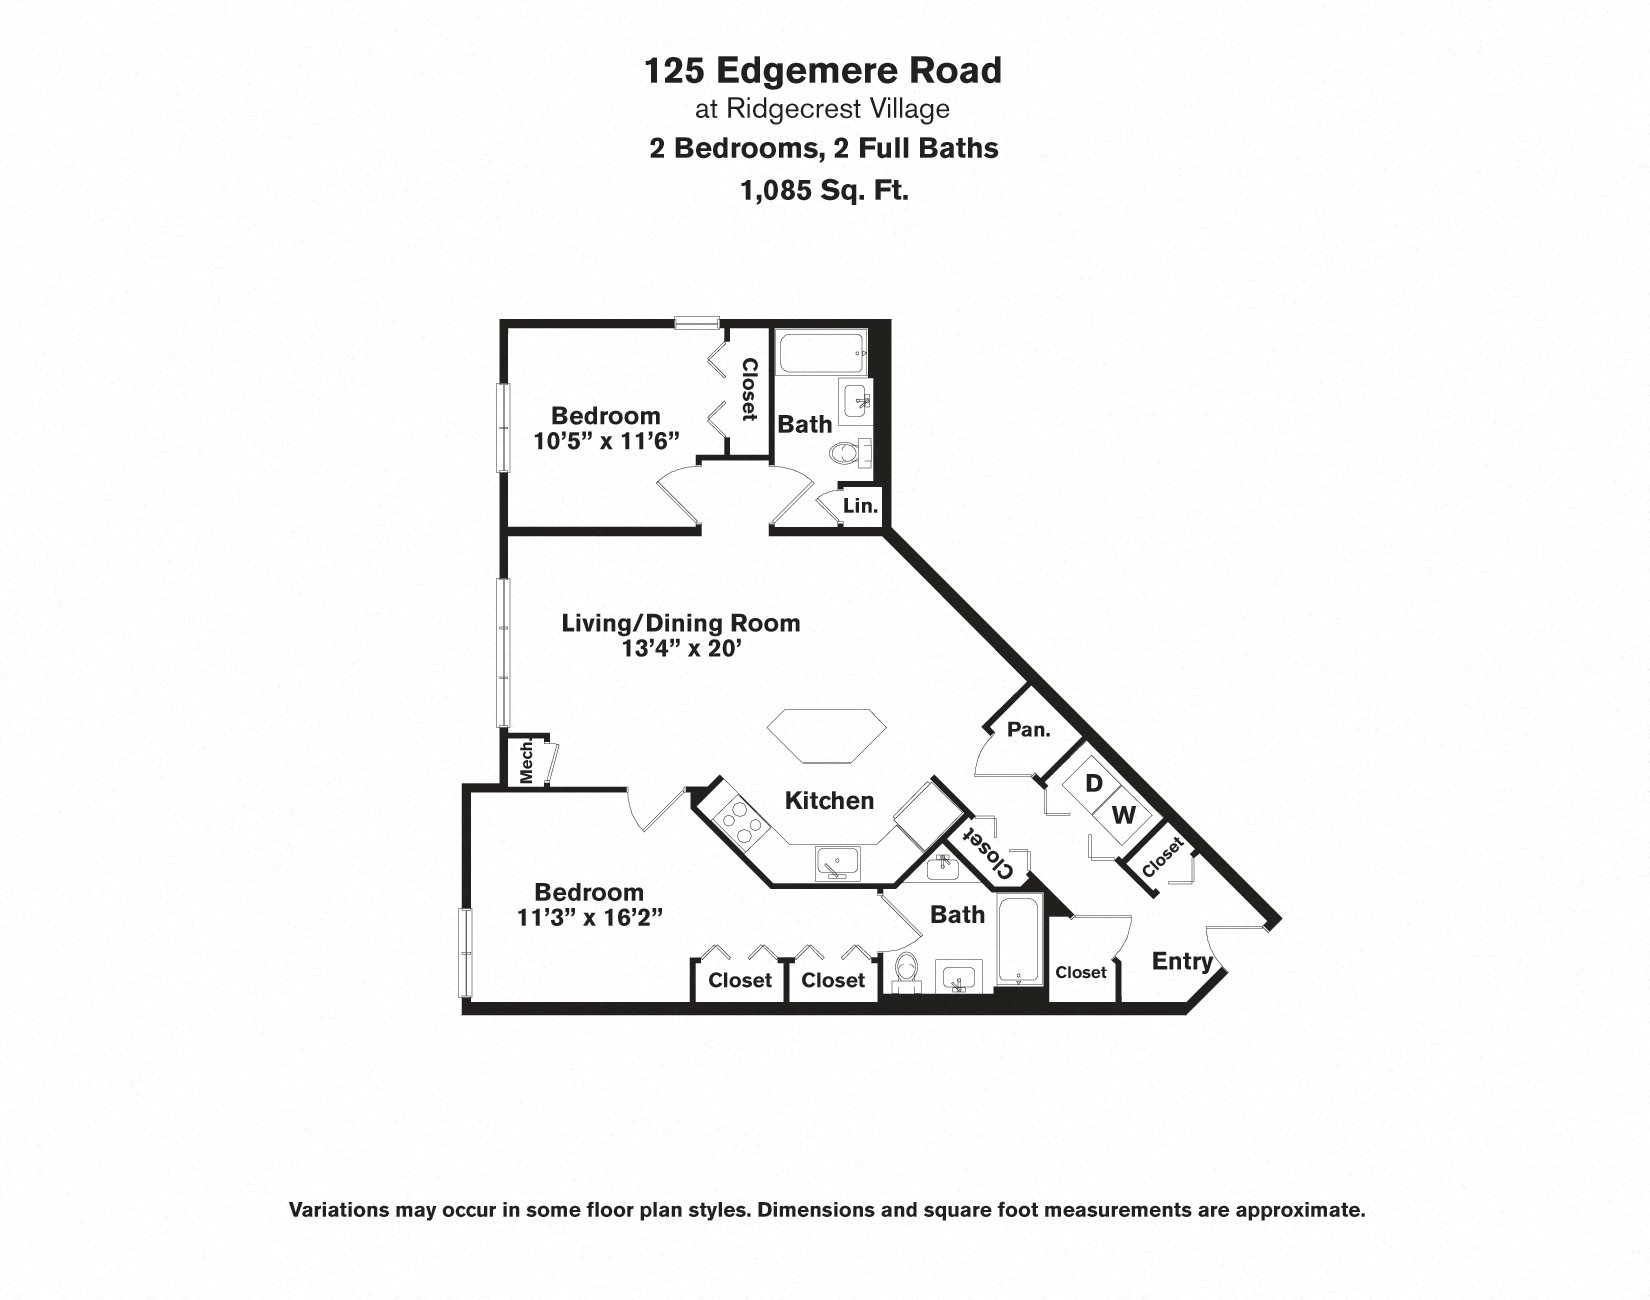 Floor plan 2 Bed/2 Bath - Edgemere image 1